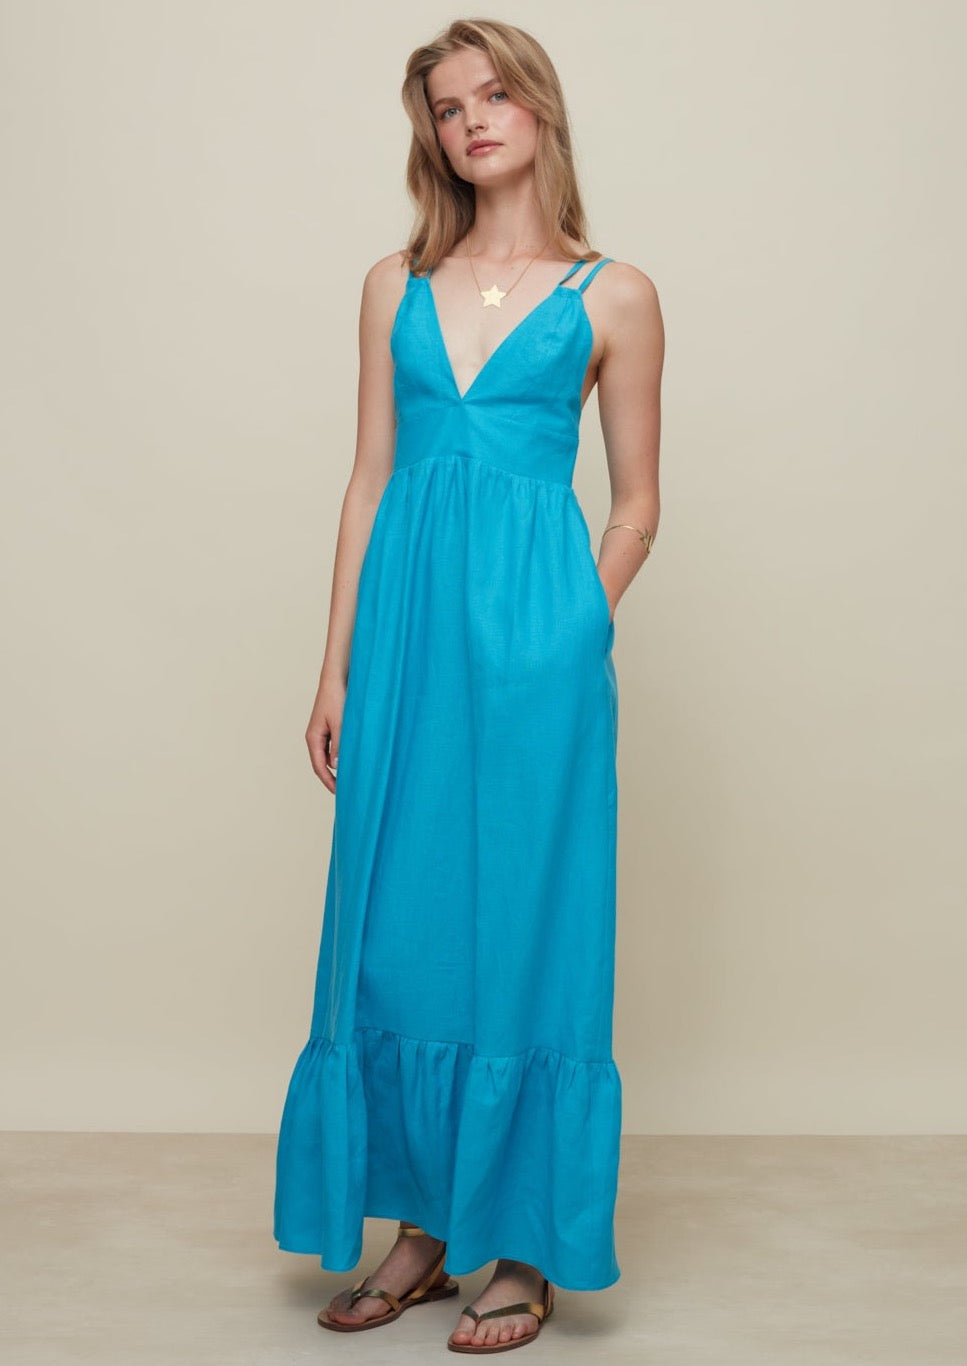 Galeria-Botanico Turquoise Dress-Justbrazil